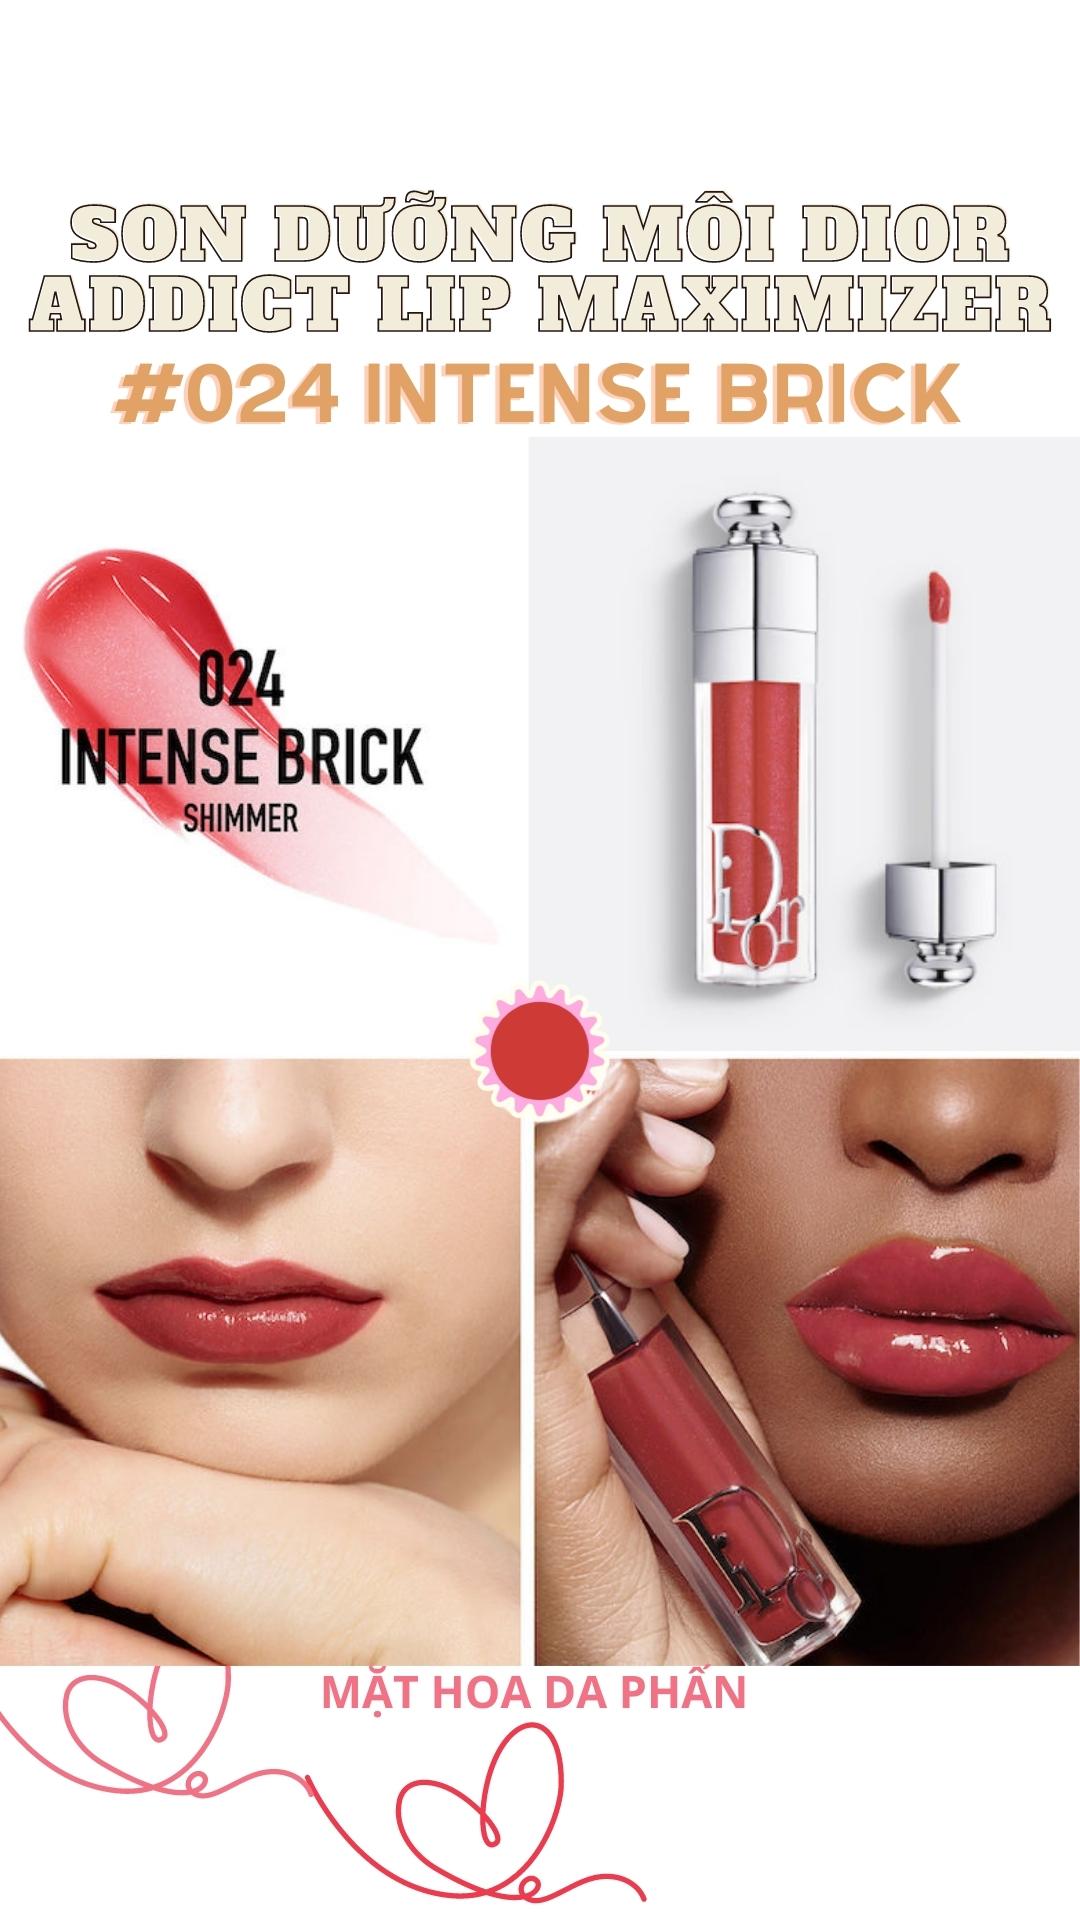 Son dưỡng môi mini Dior Addict Lip Maximizer 012 màu hồng cam